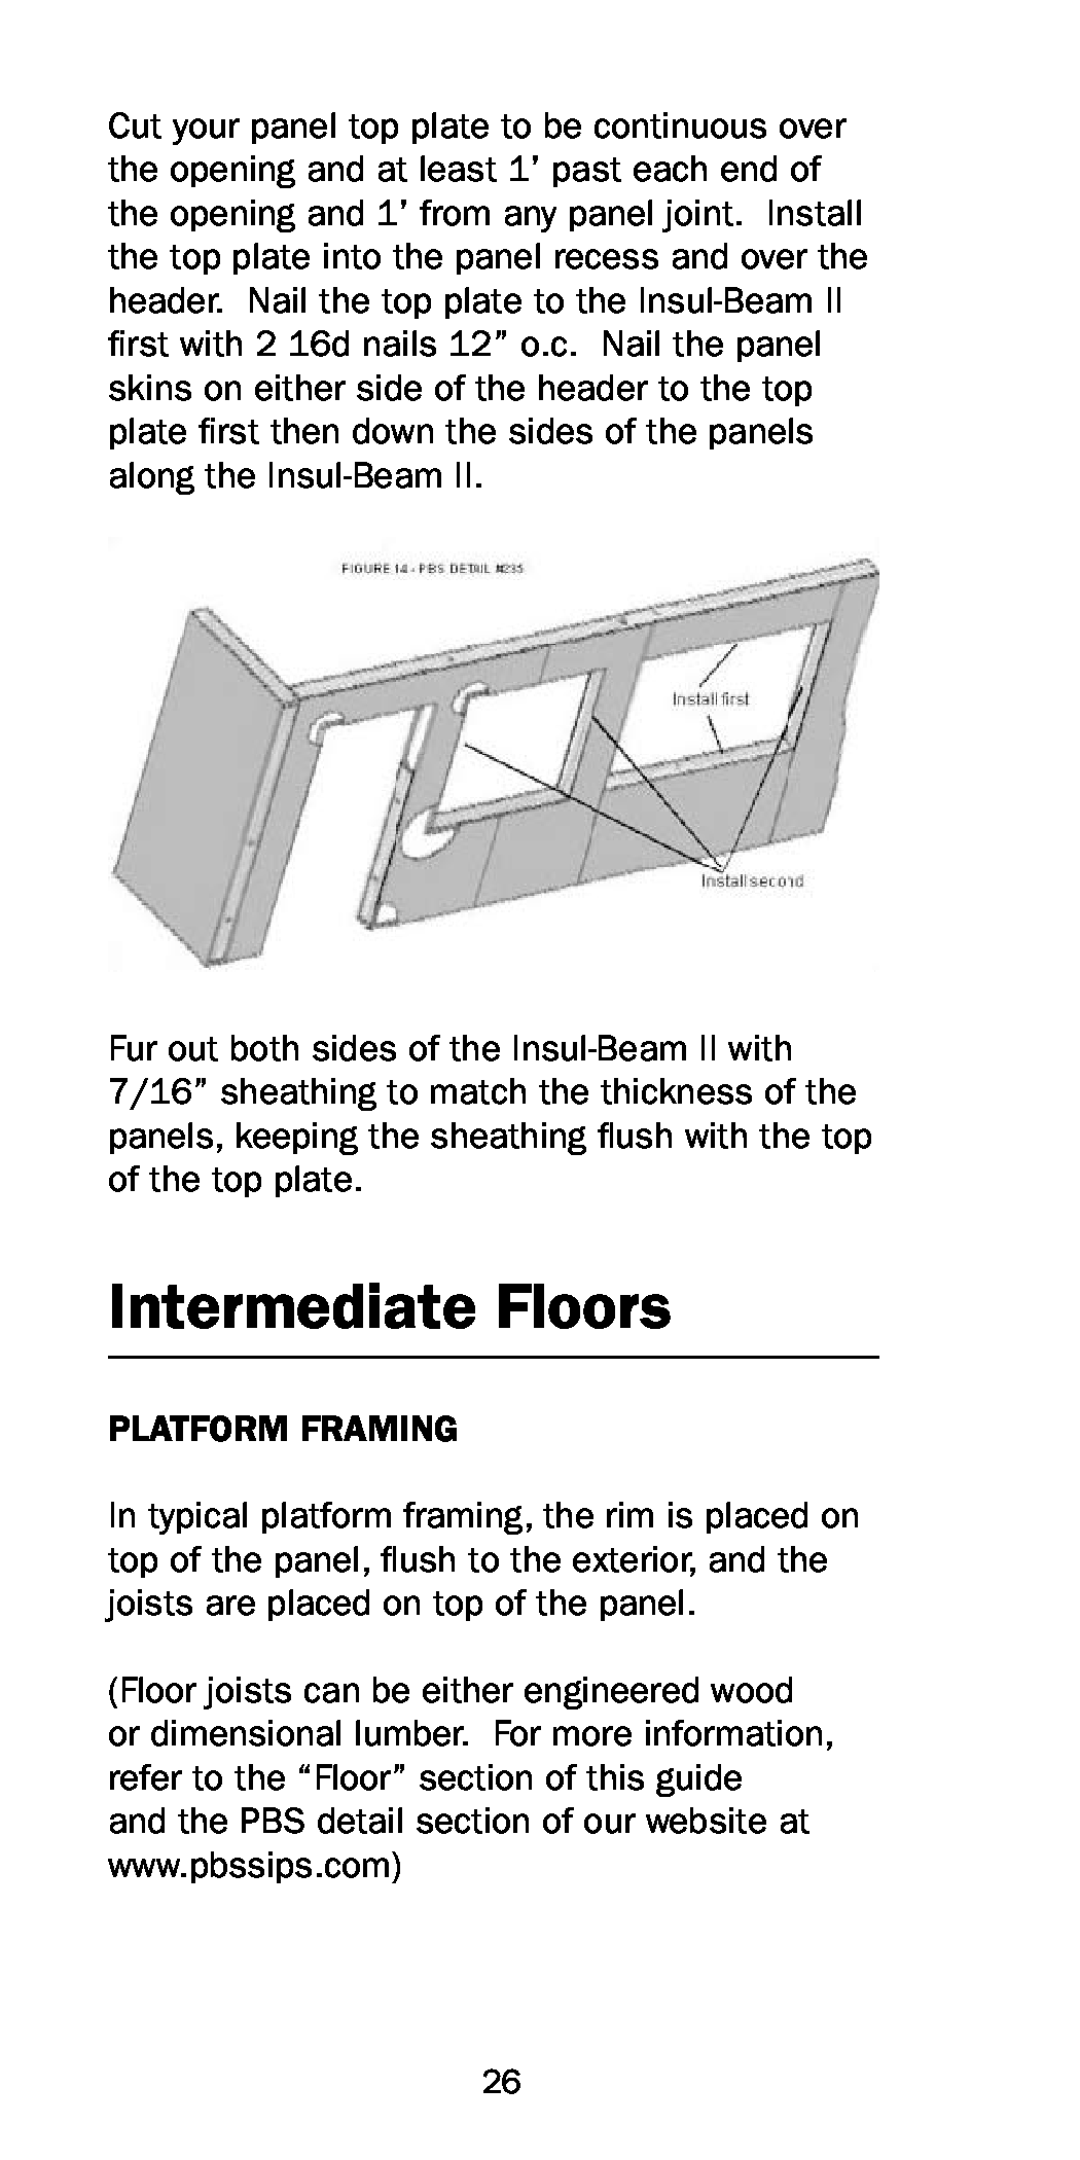 Premier manual Intermediate Floors 